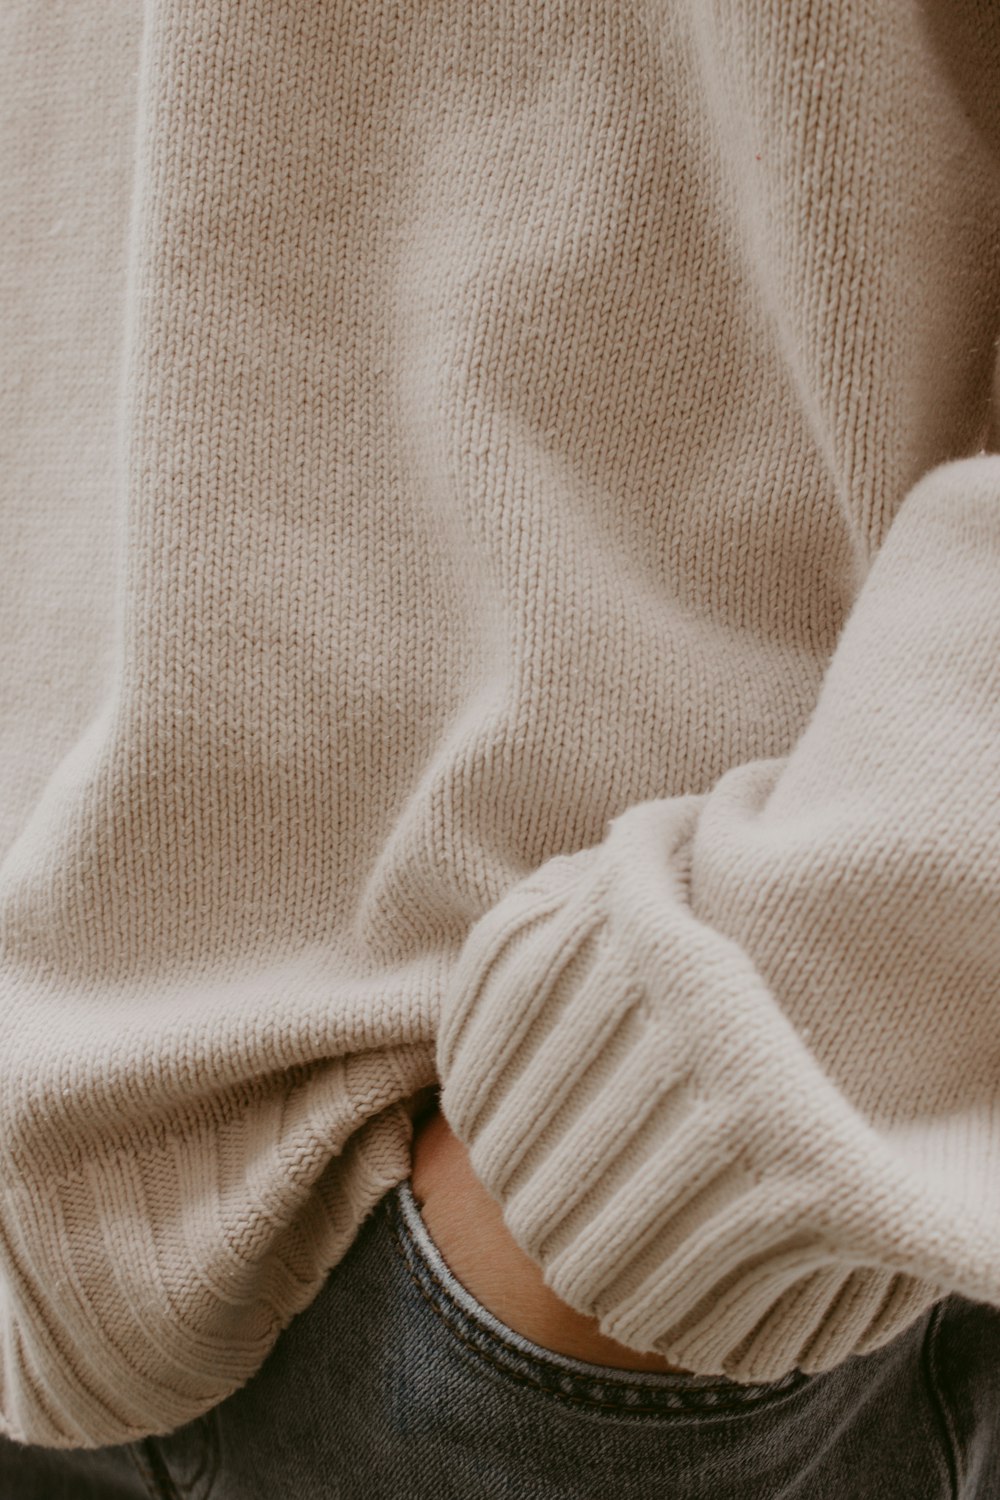 person holding white knit textile